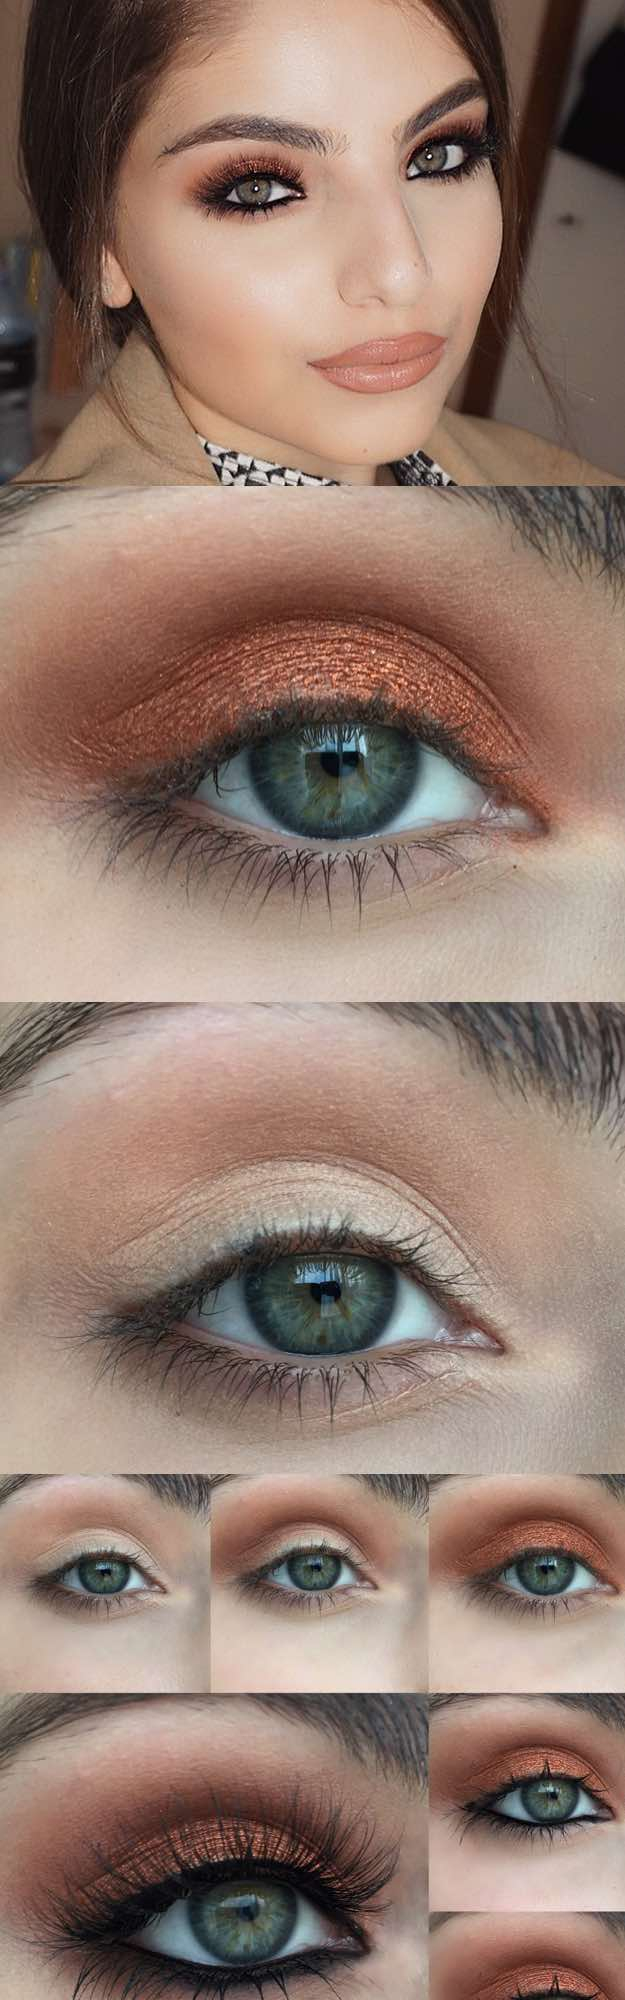 Best Eye Makeup For Green Eyes 50 Perfect Makeup Tutorials For Green Eyes The Goddess